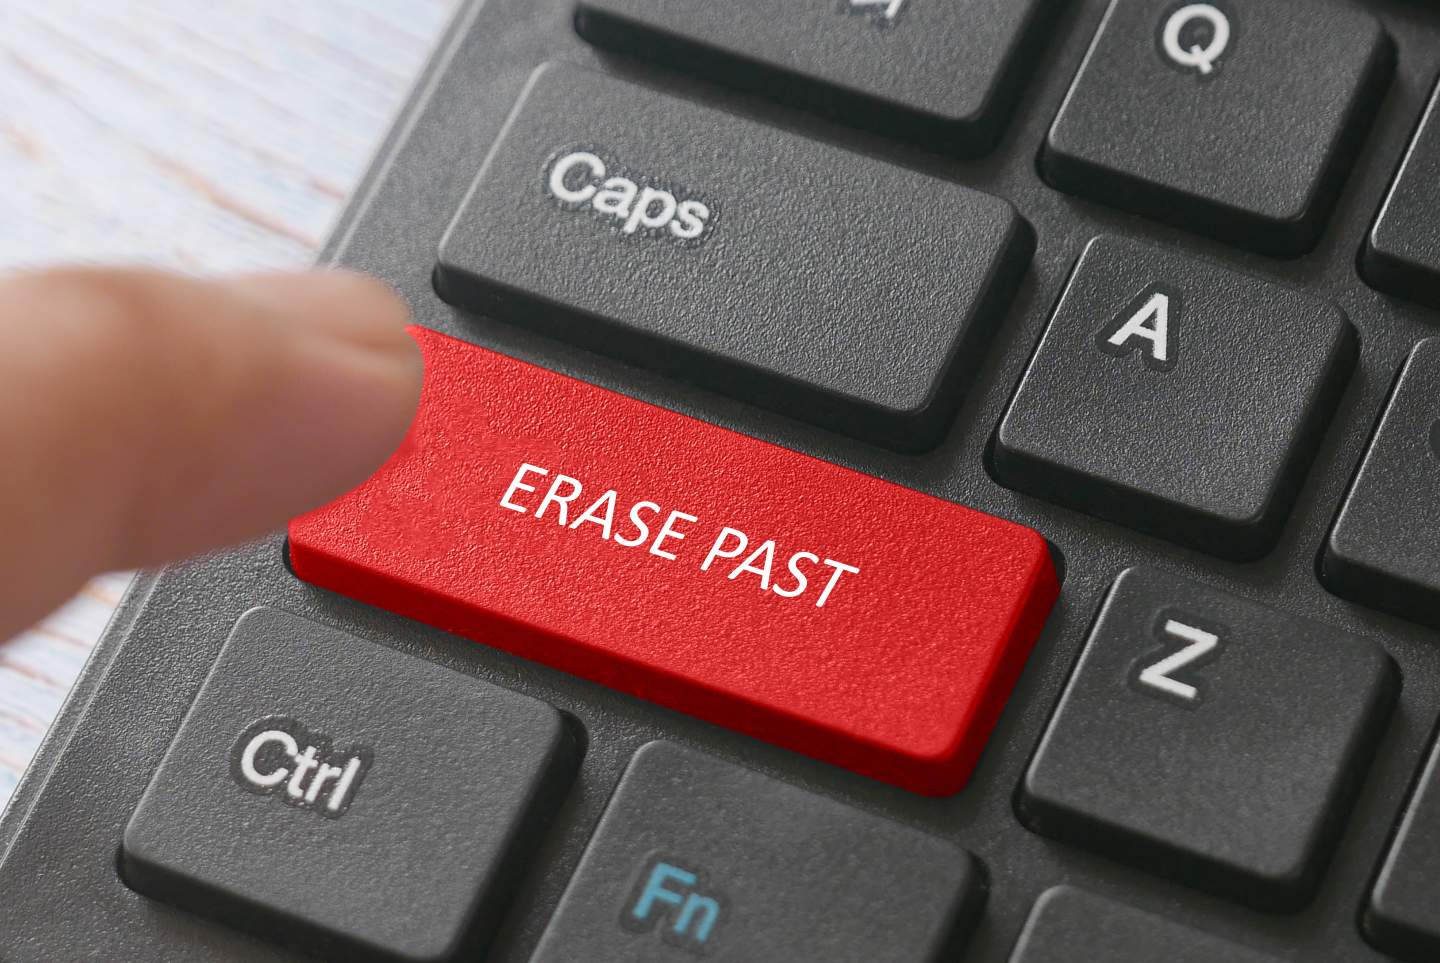 Finger hovering over button labeled "erase past" 